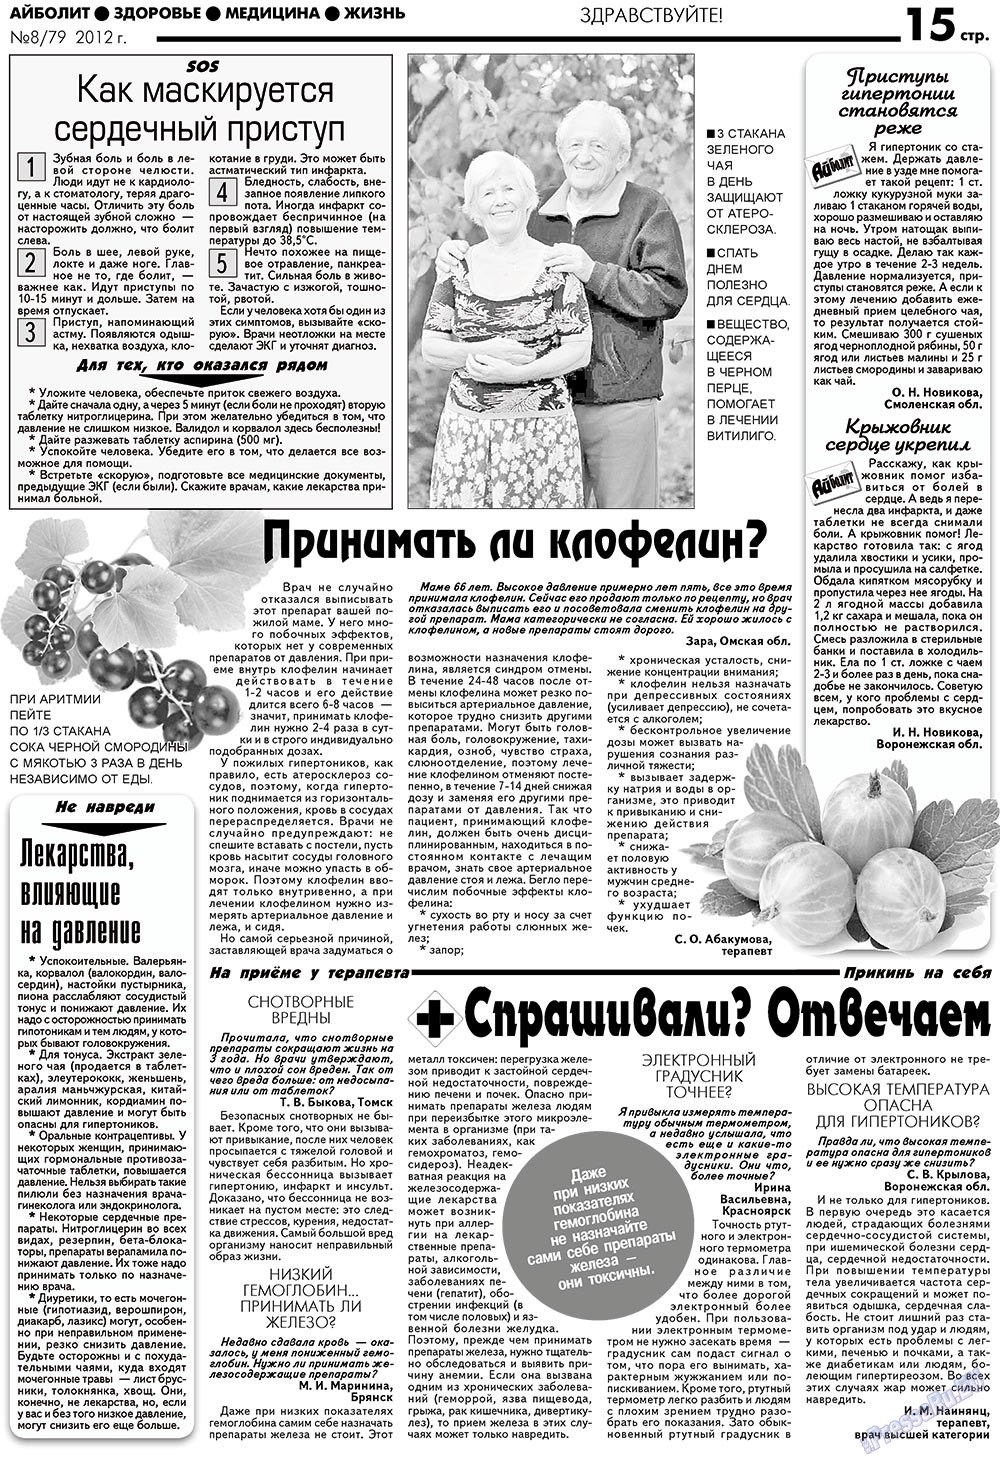 АйБолит (газета). 2012 год, номер 8, стр. 15